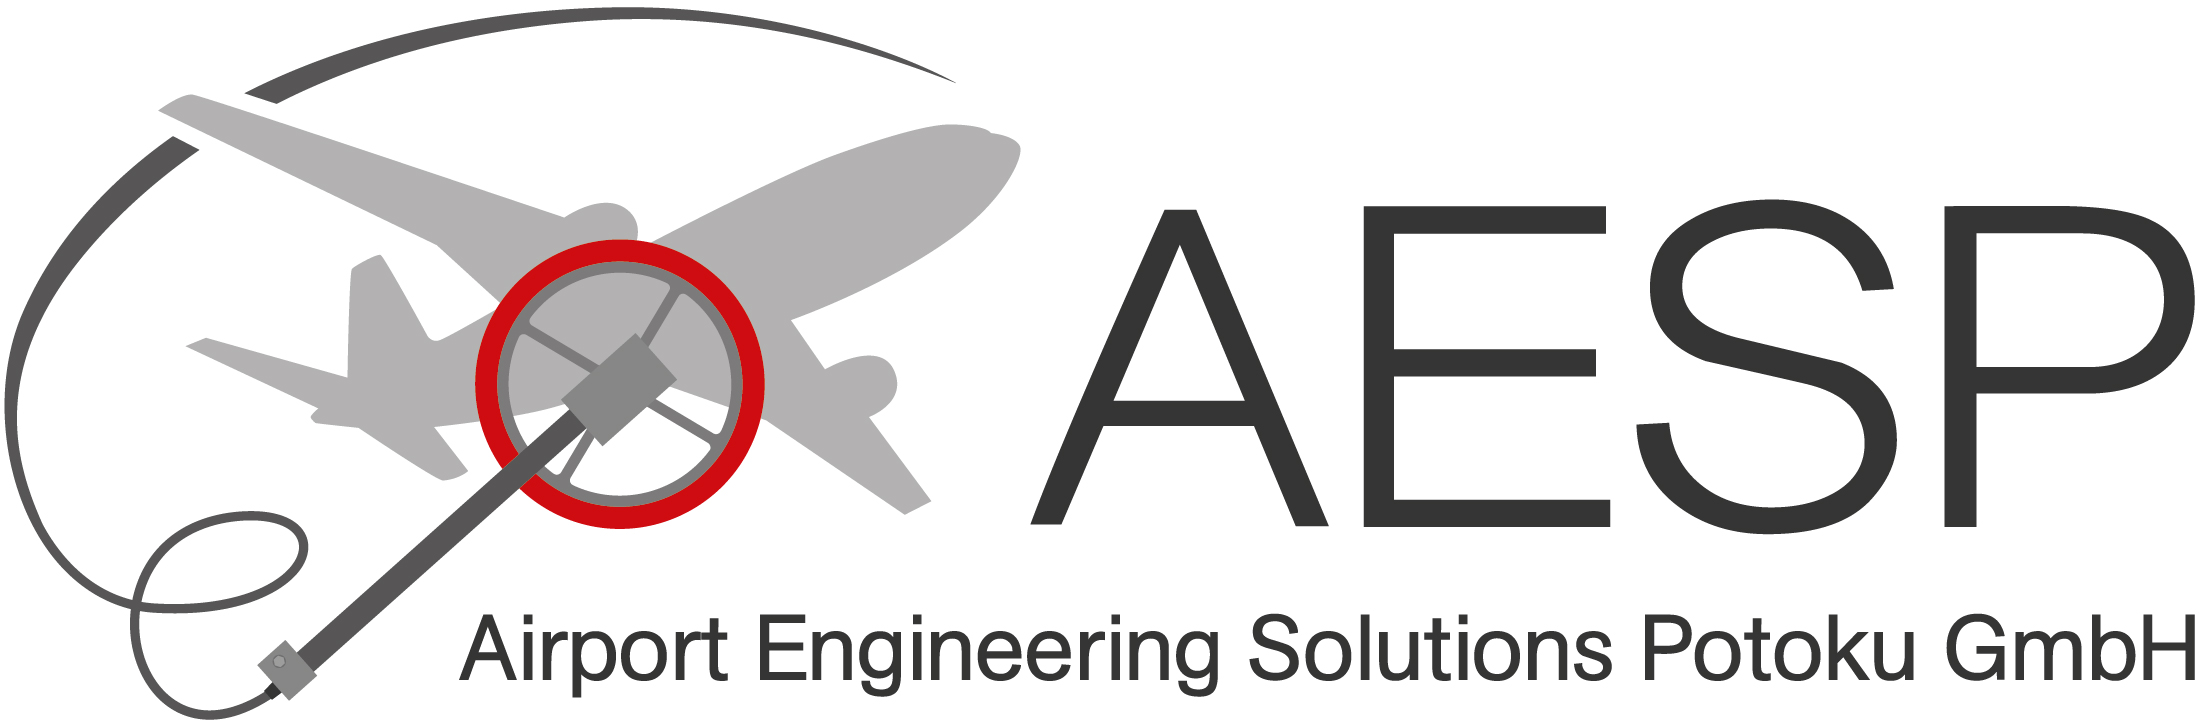 AESP Airport Engineering Solutions Potoku GmbH